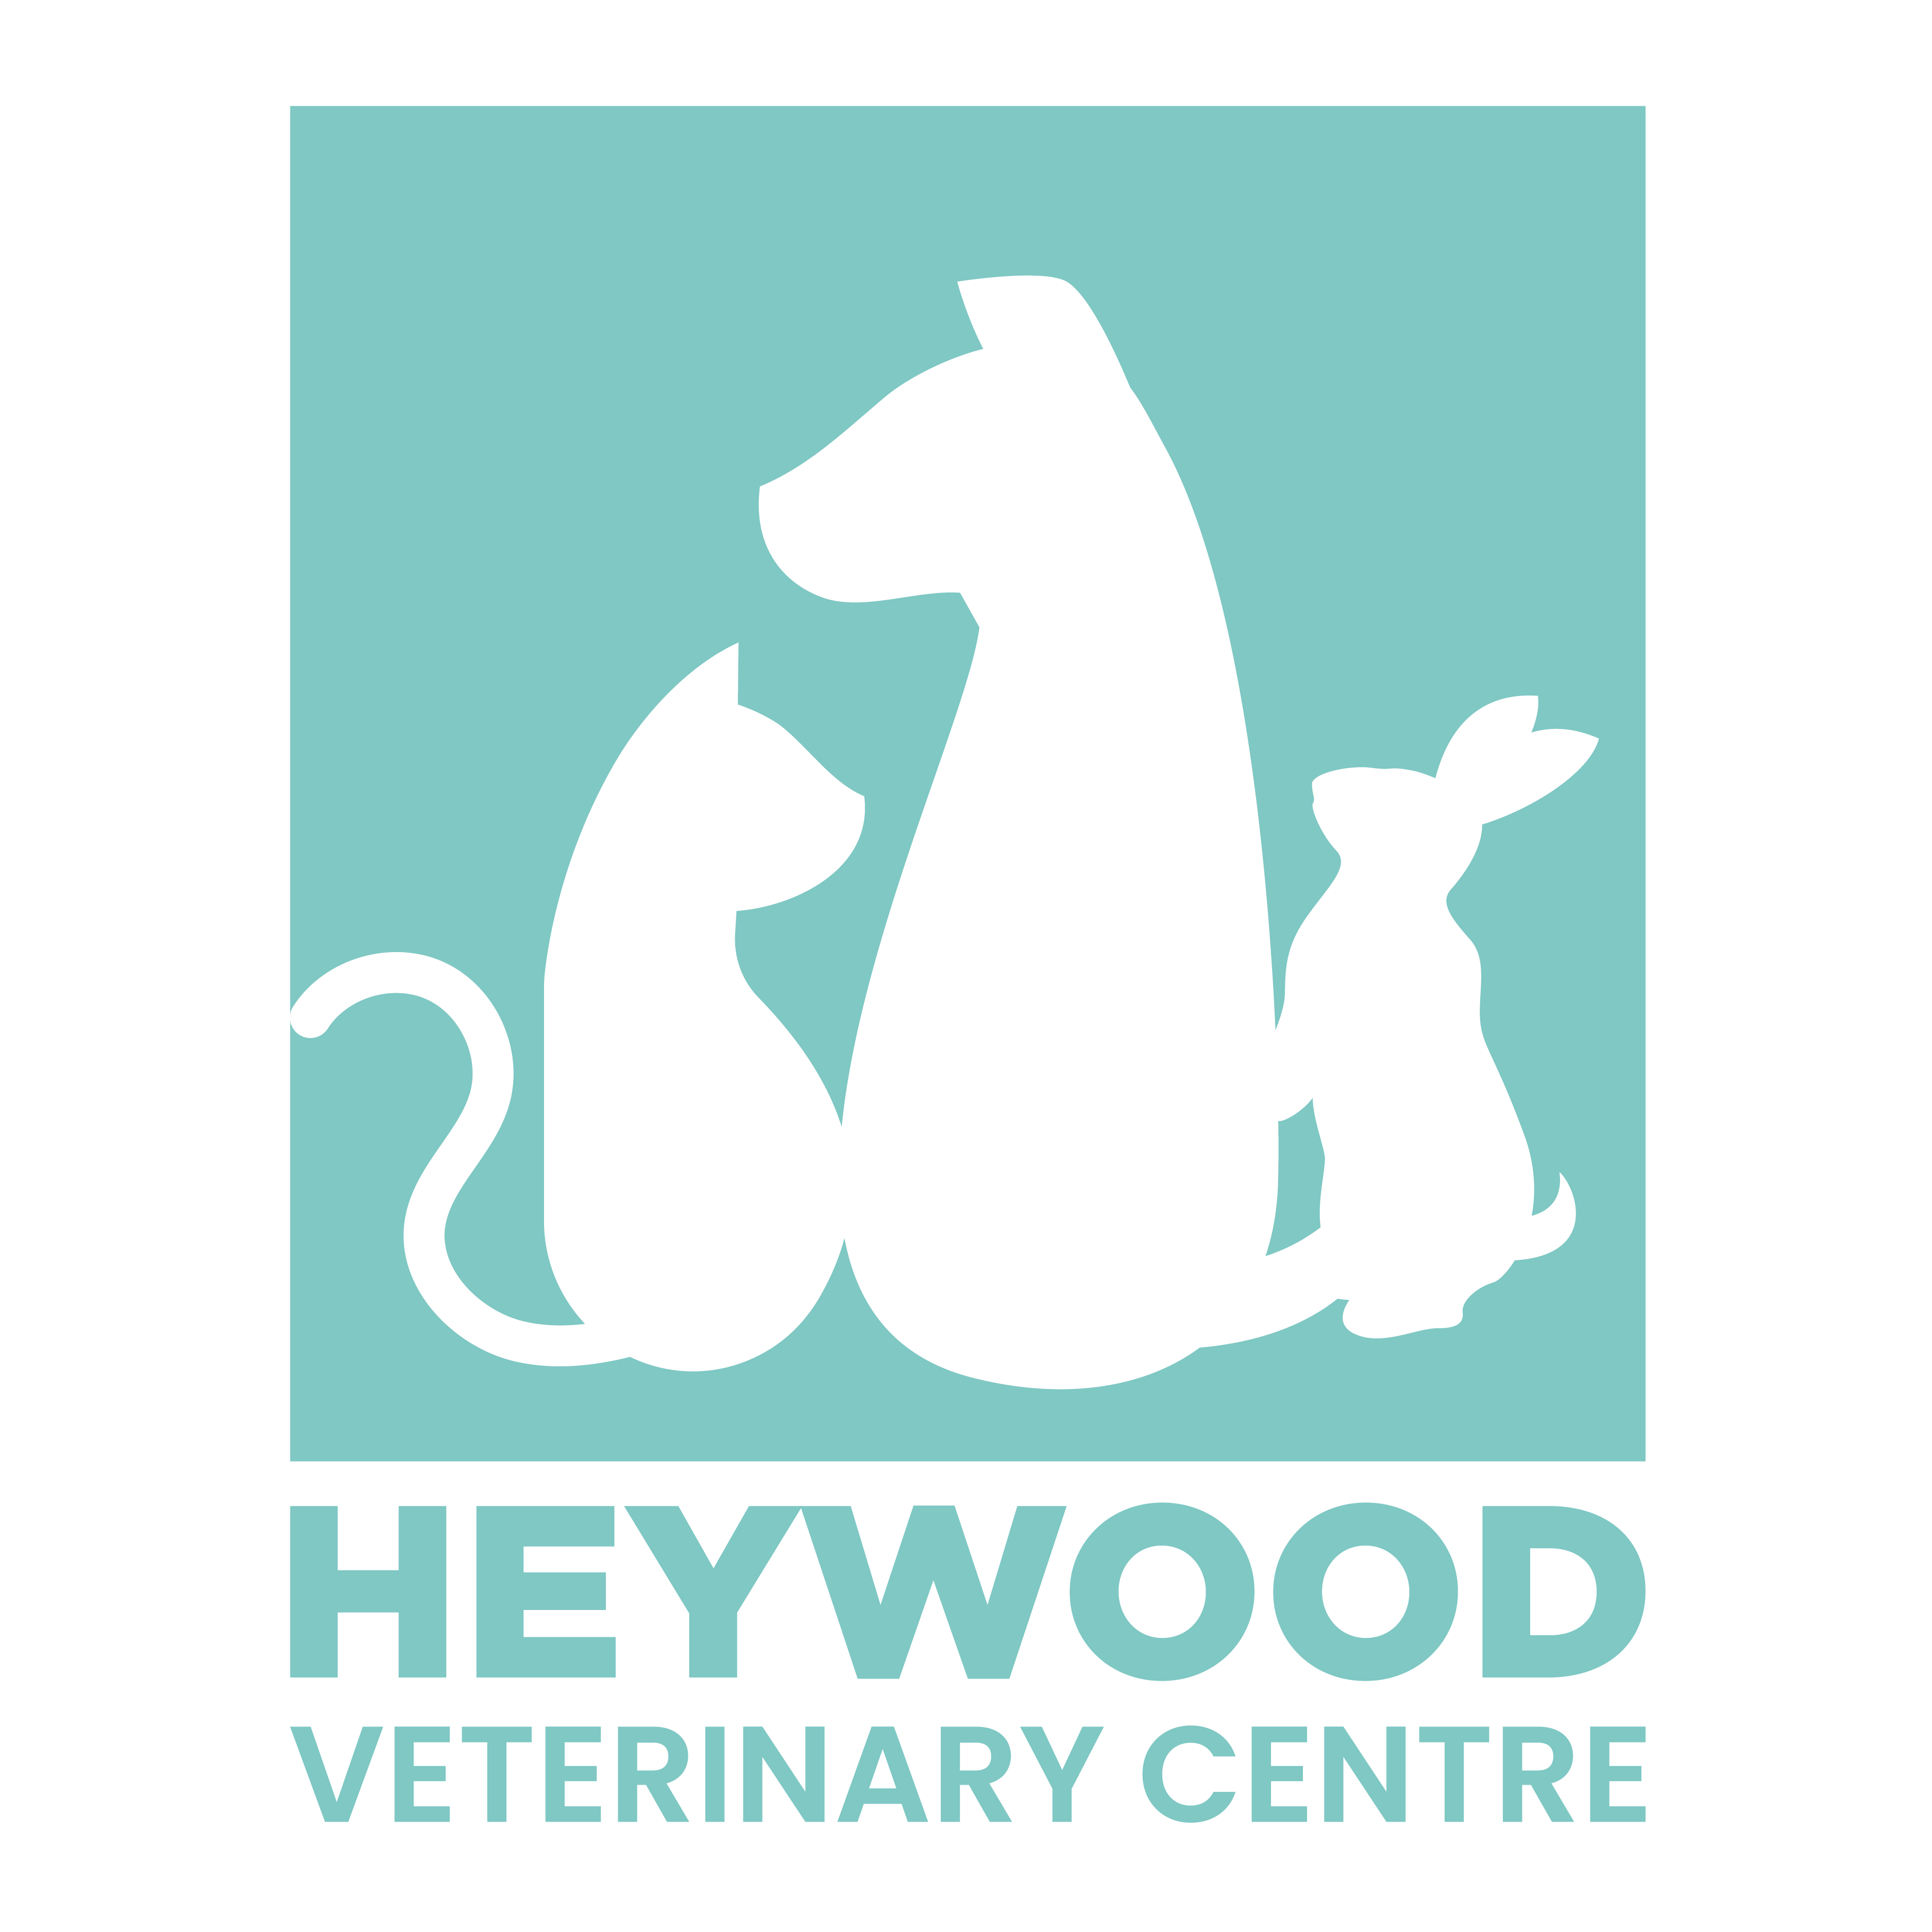 Heywood Veterinary Centre